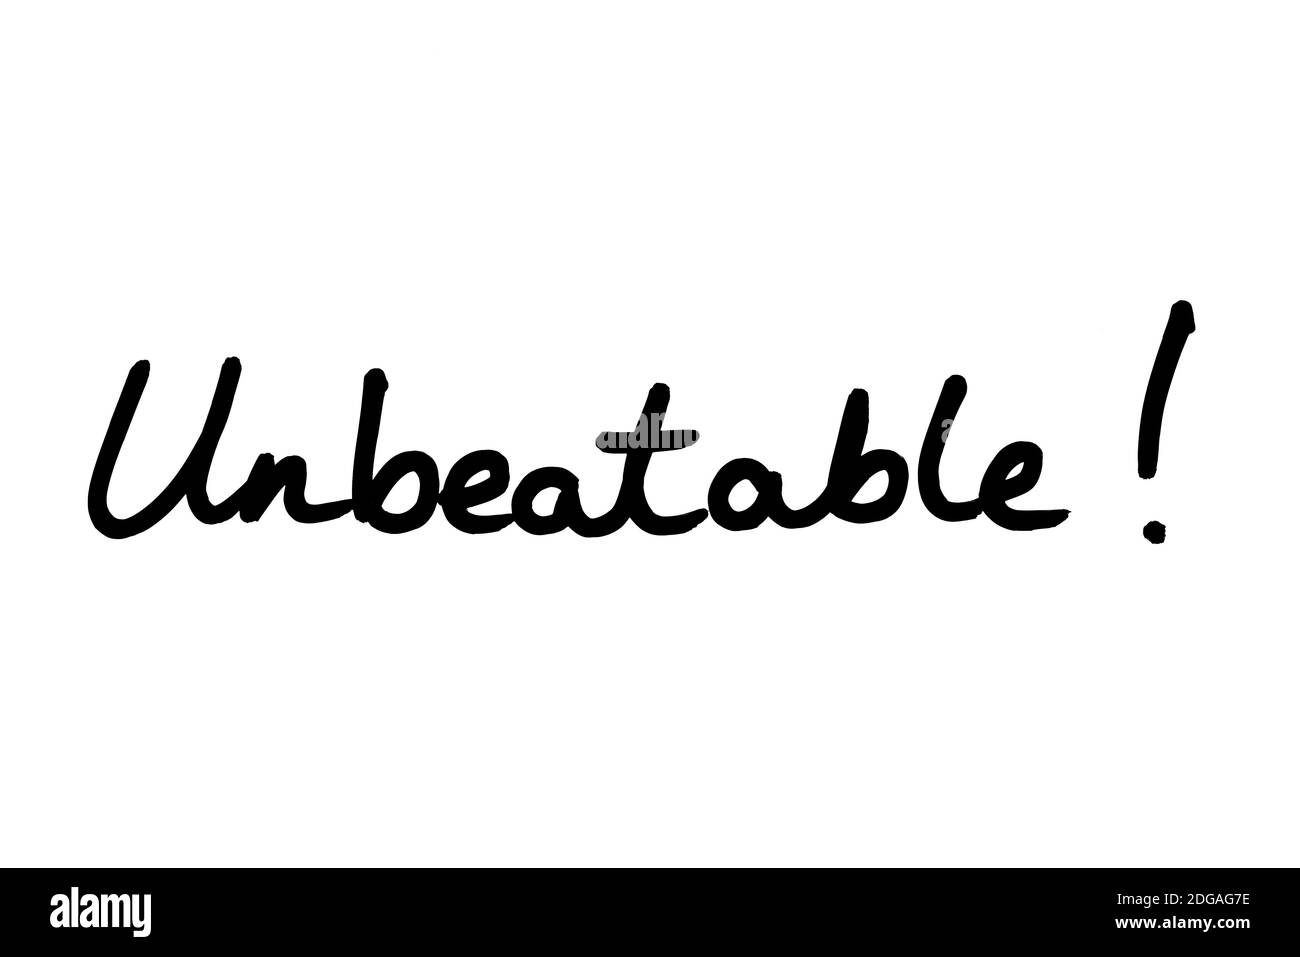 Unbeatable! handwritten on a white background. Stock Photo